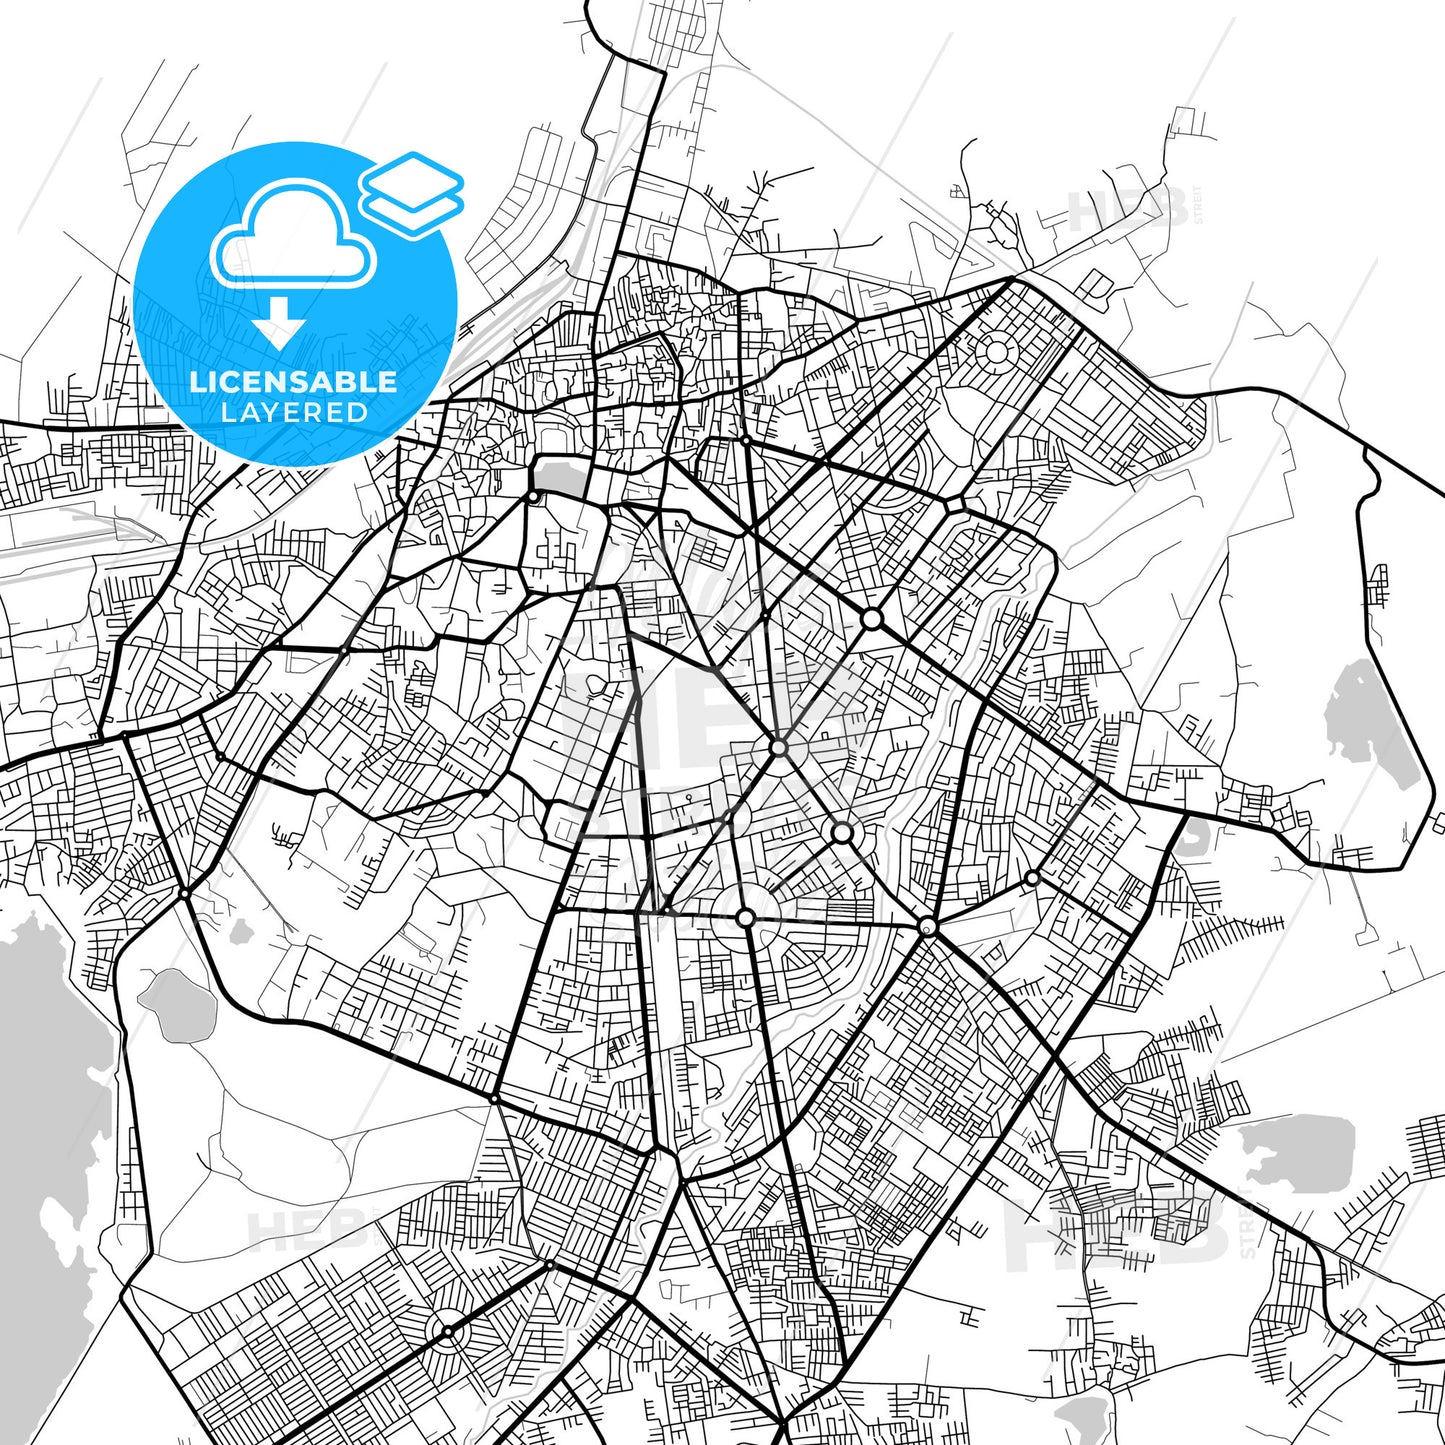 Layered PDF map of Bhavnagar, Gujarat, India